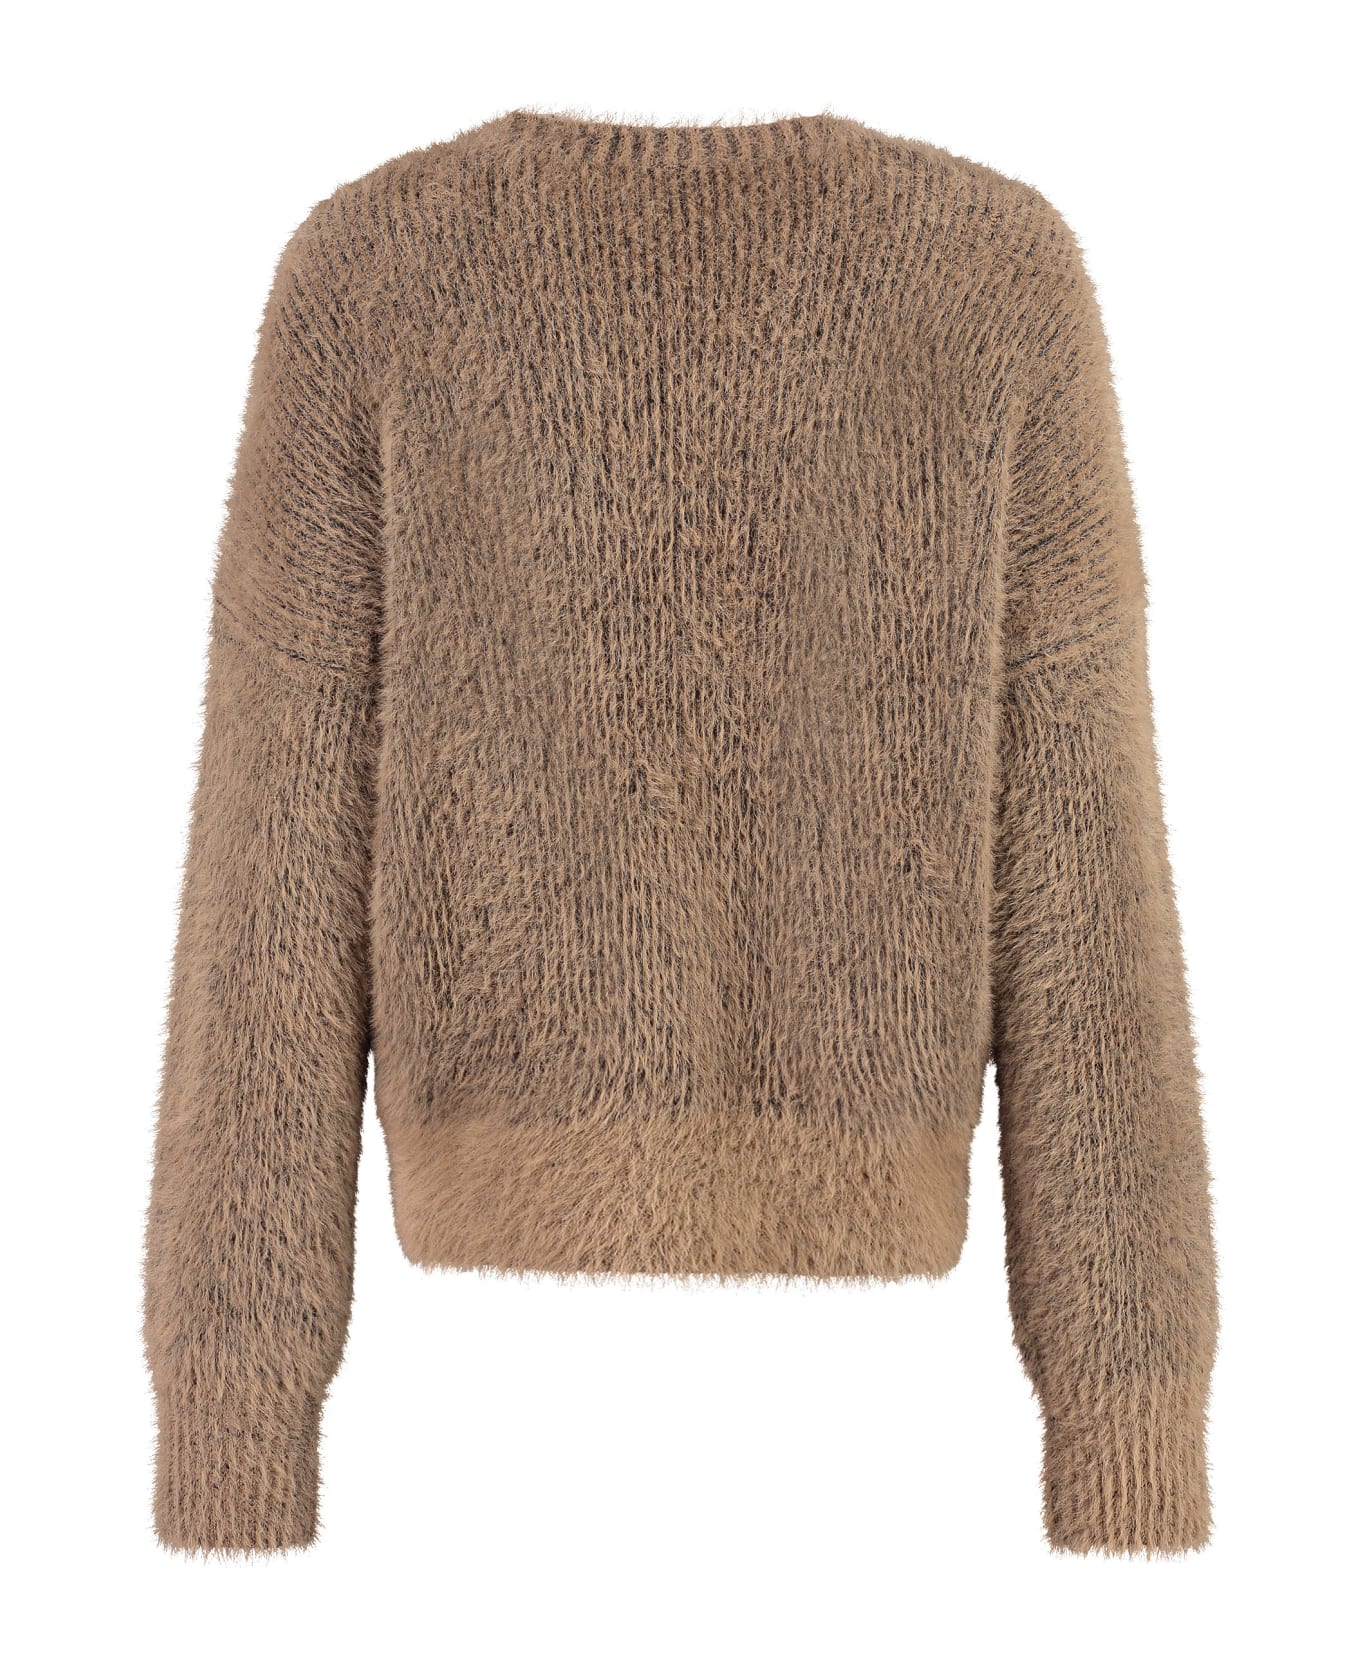 Stella McCartney Fluffy Long Sleeve Crew-neck Sweater - Camel